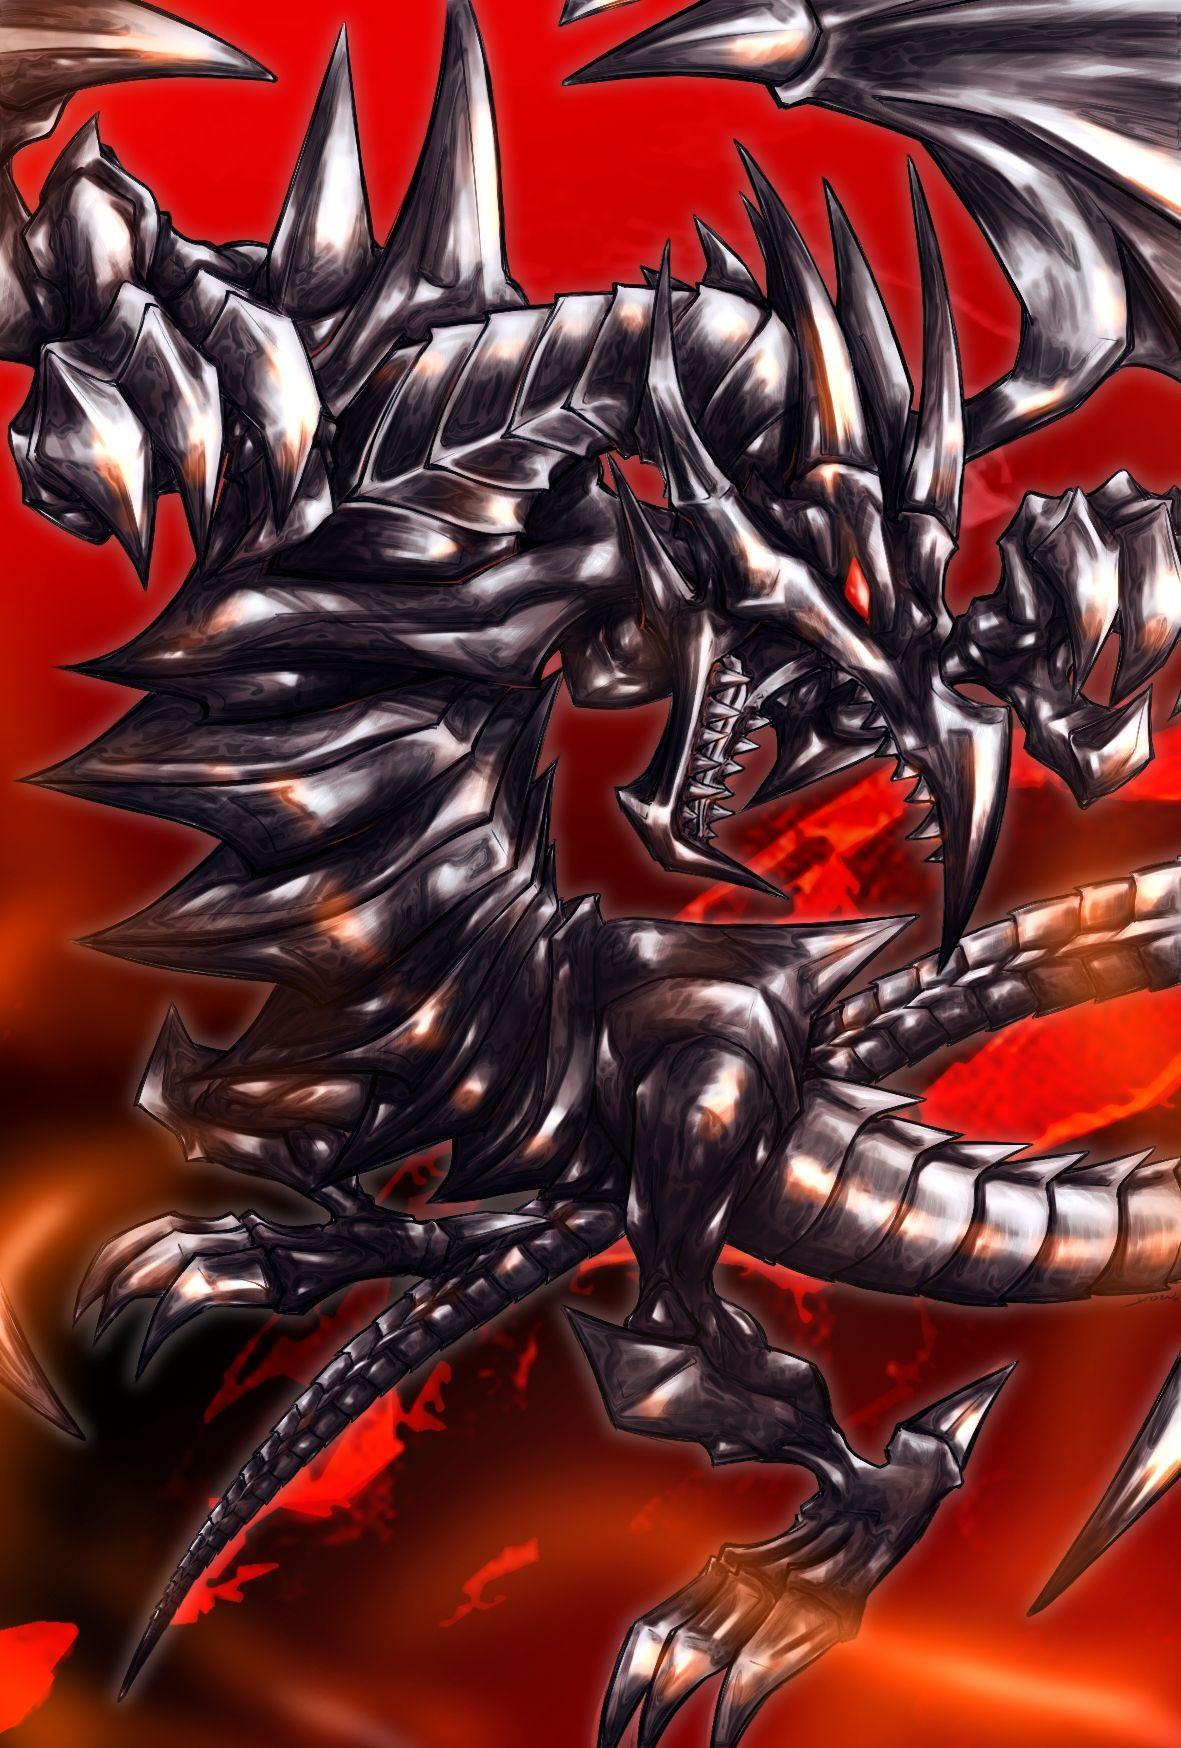 Red Eyes Black Dragon Wallpaper. Black dragon